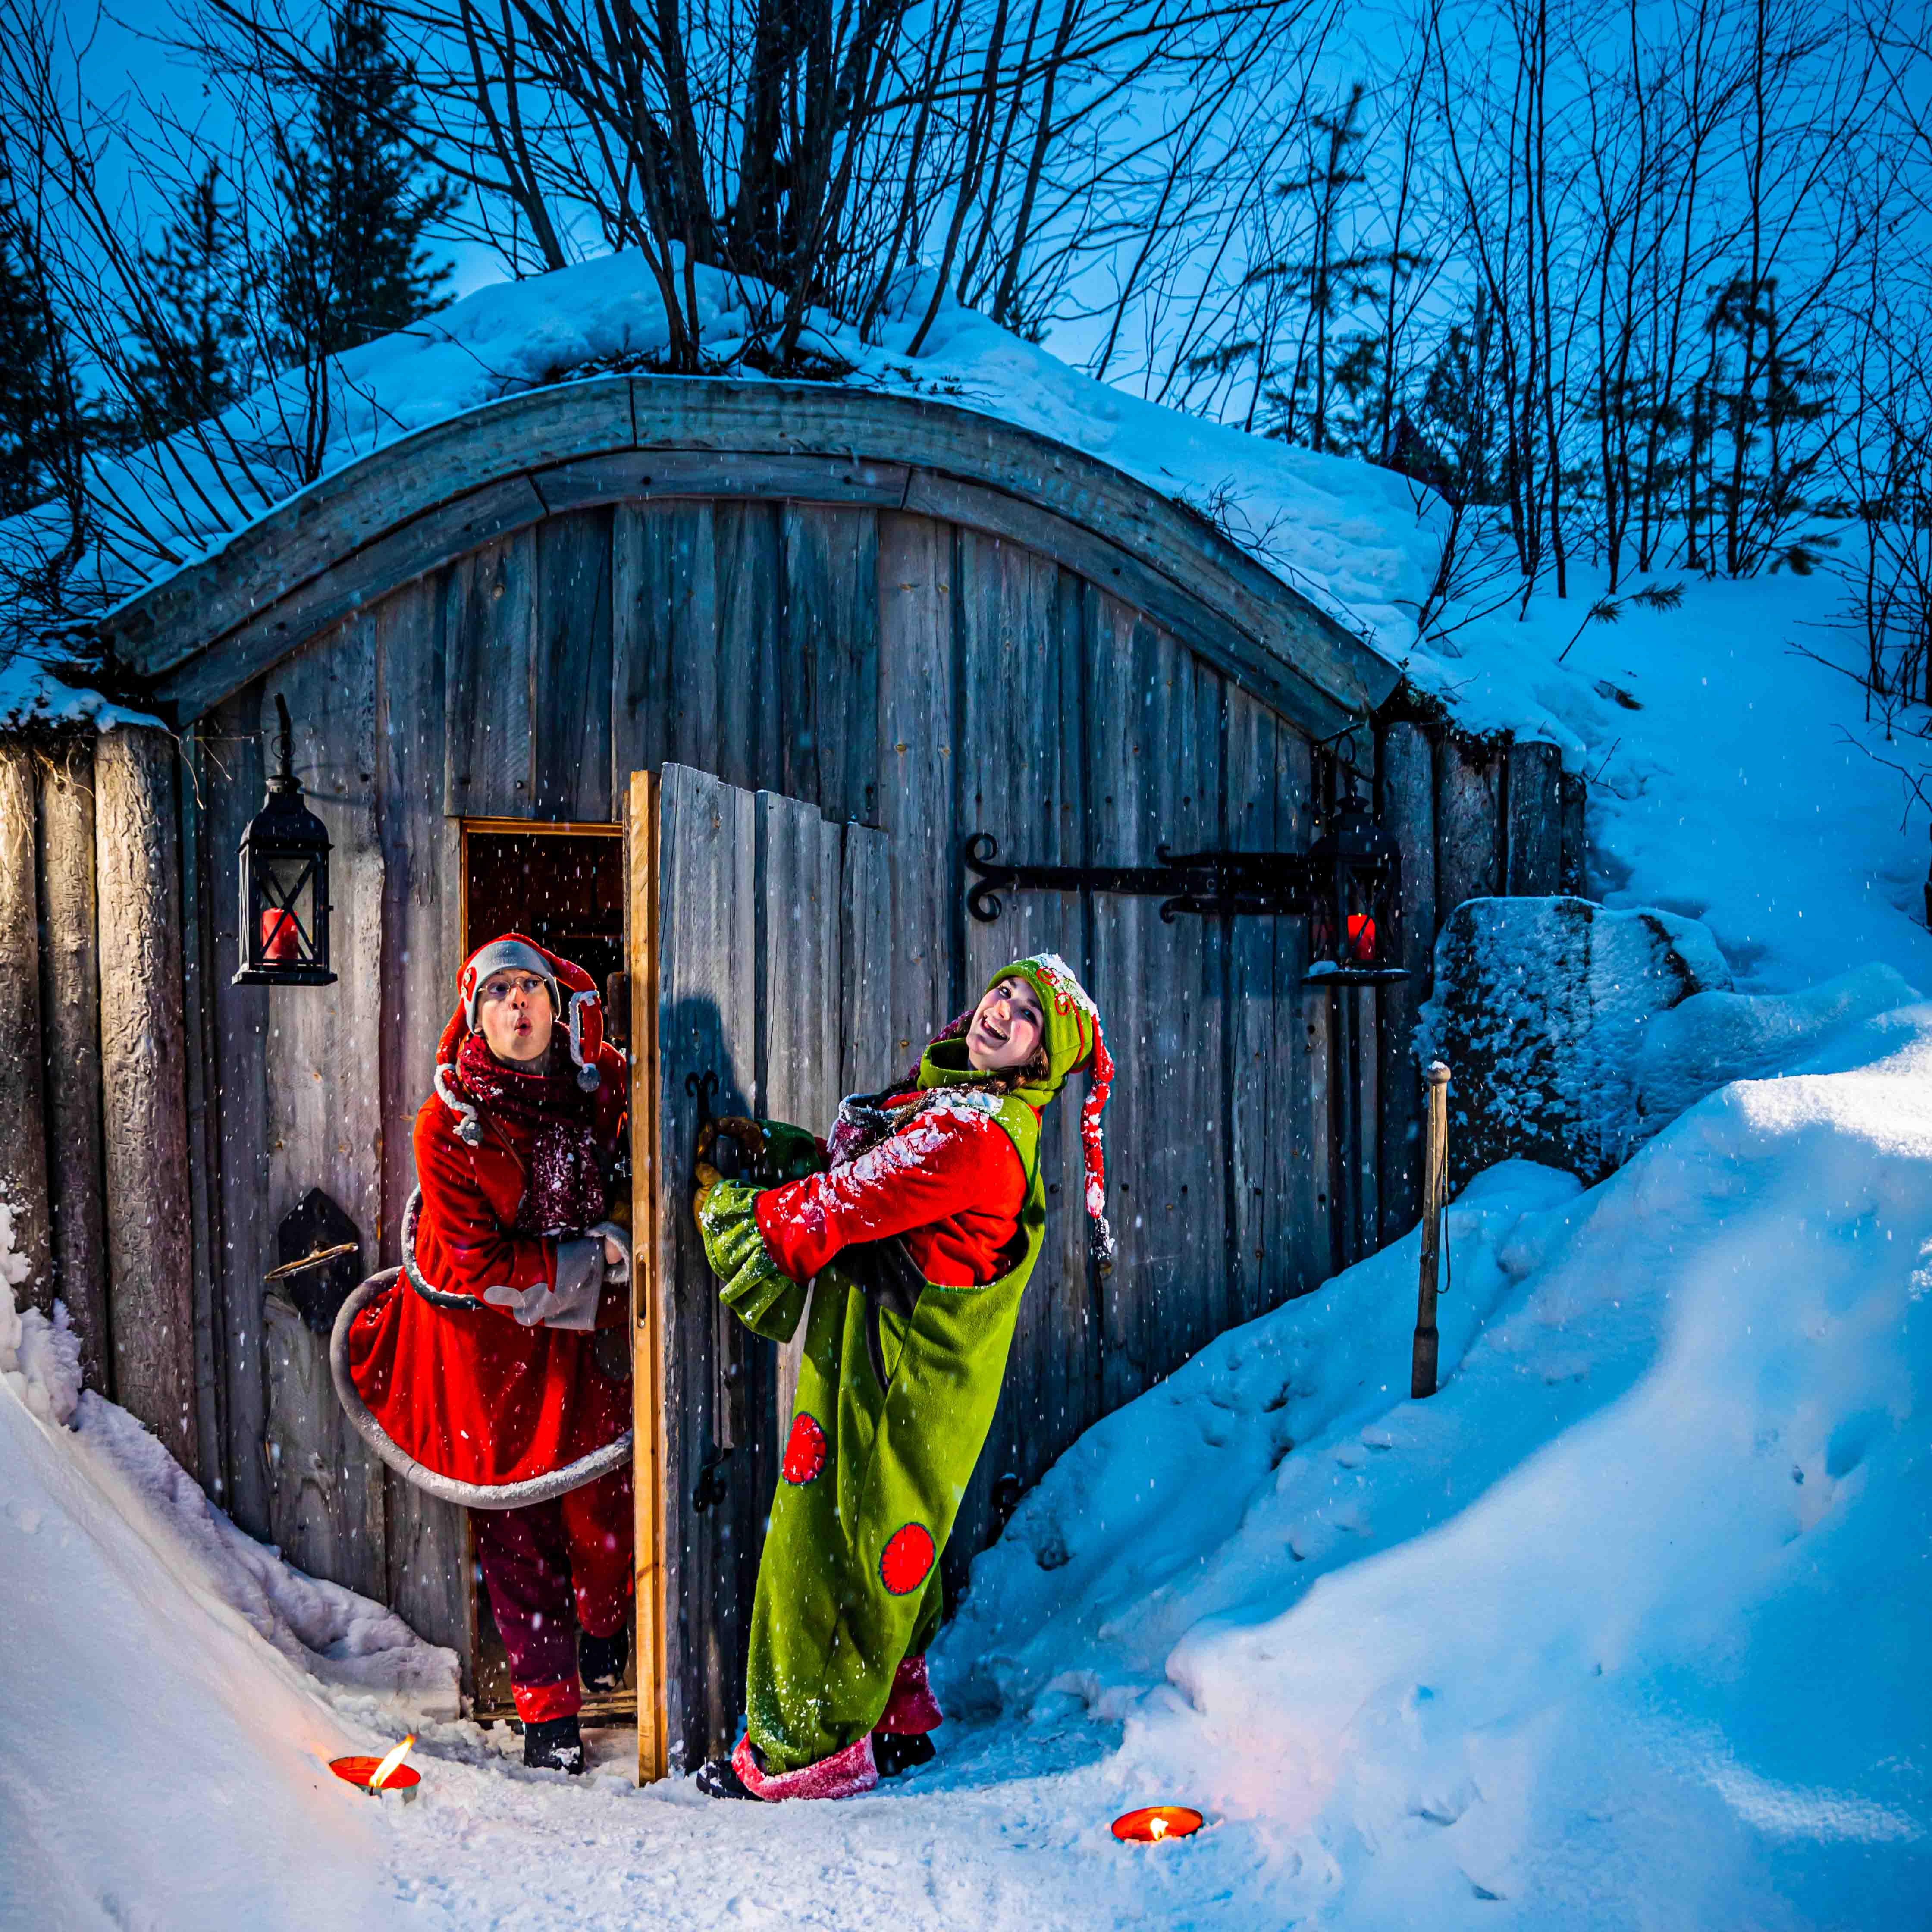 Santa Claus Secret Forest - Joulukka is a magical christmas destination in Rovaniemi Lapland